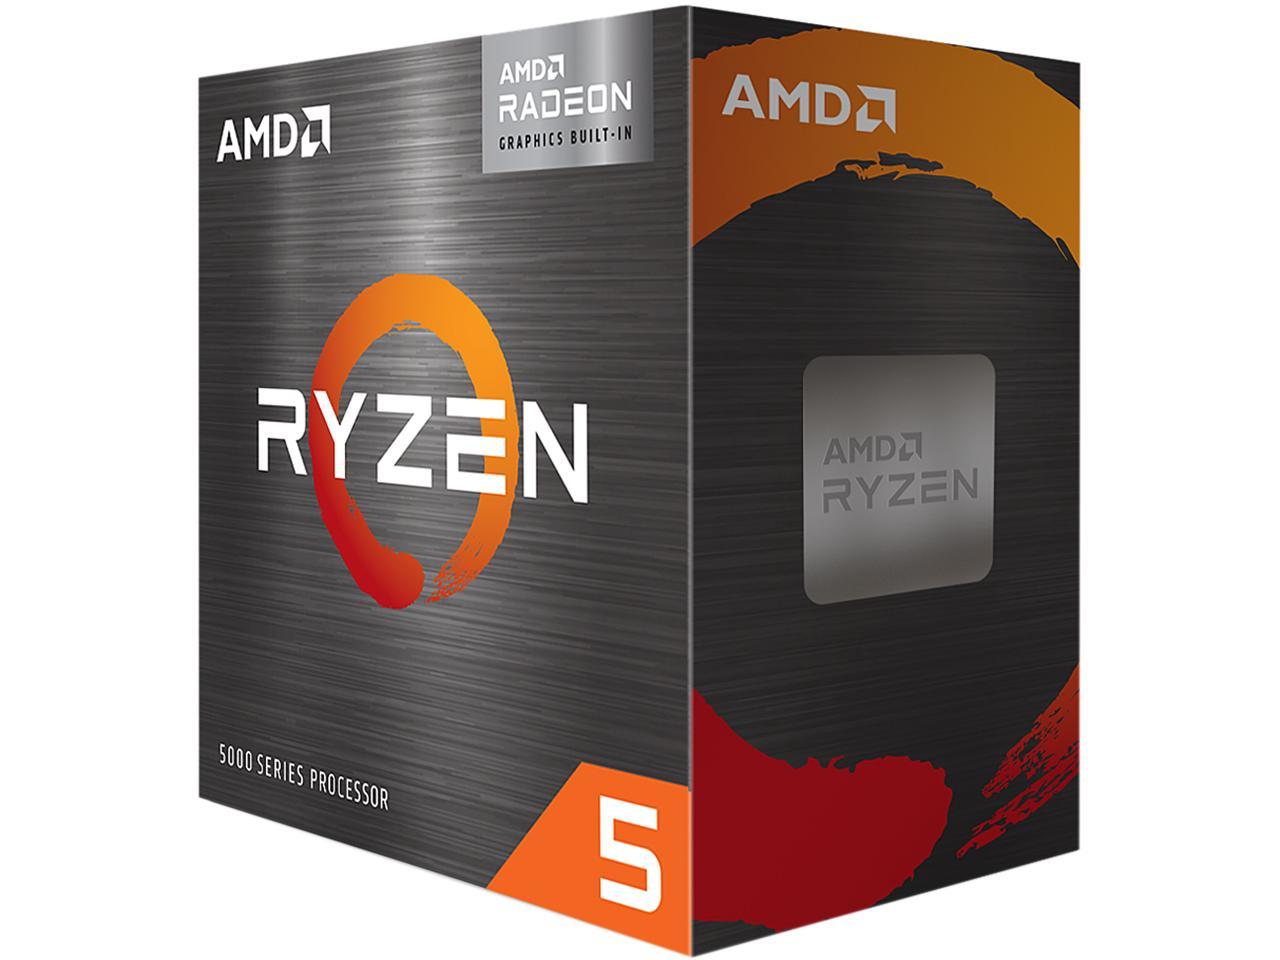 AMD Ryzen 5 5600G Desktop Processor $199 + Free Shipping